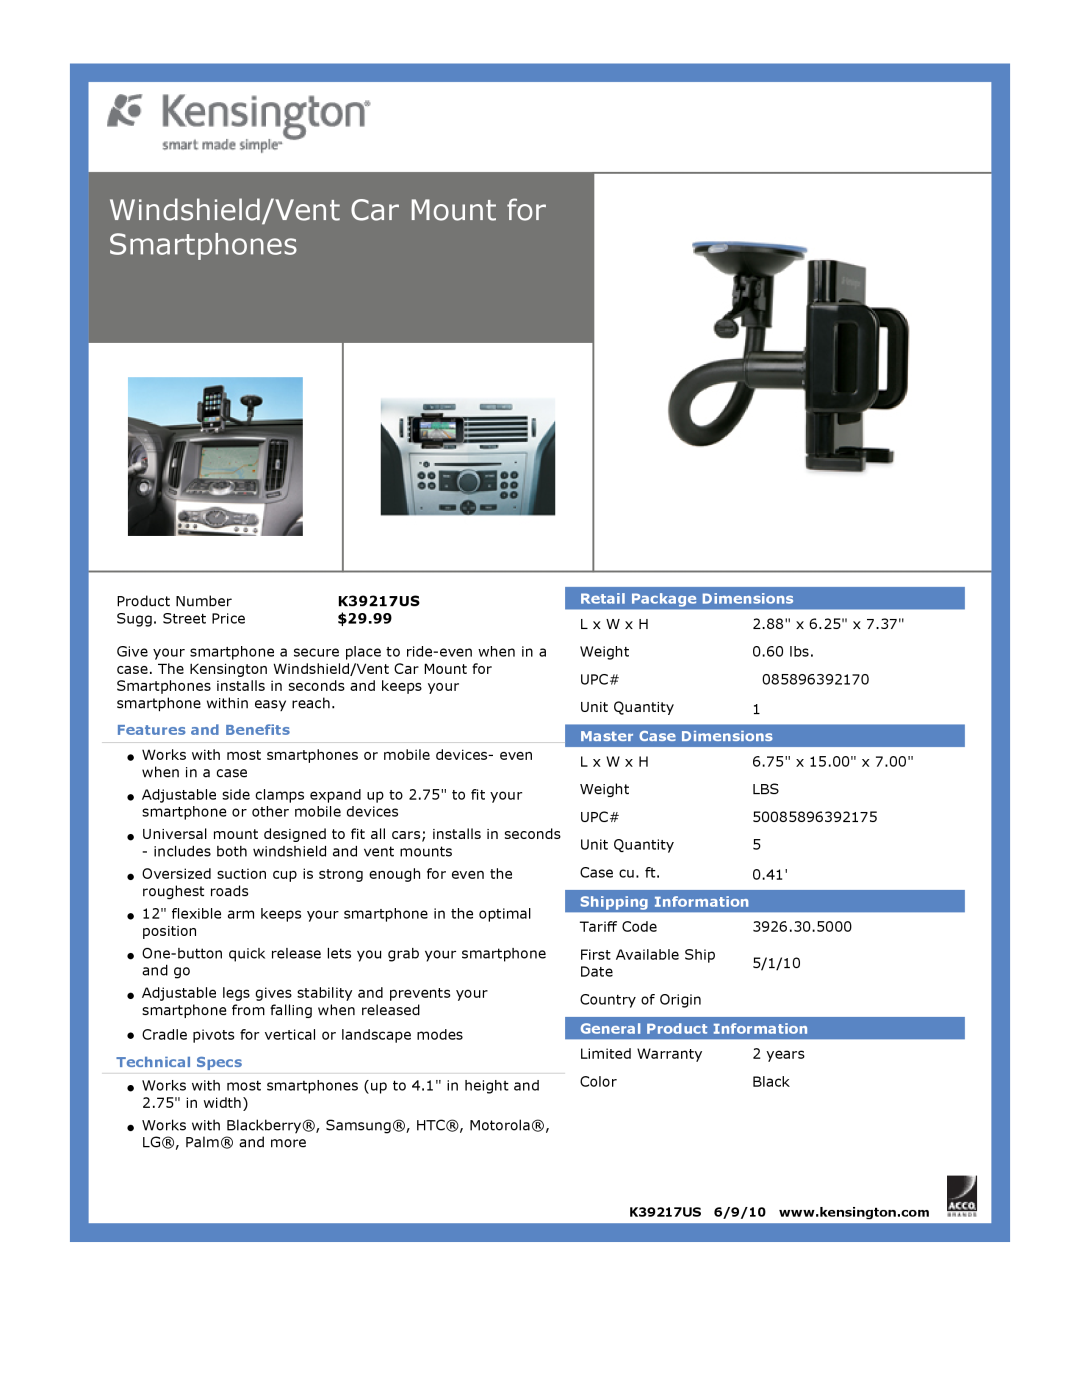 Kensington EU64325 dimensions Windshield/Vent Car Mount for Smartphones, $29.99, Features and Benefits, Technical Specs 